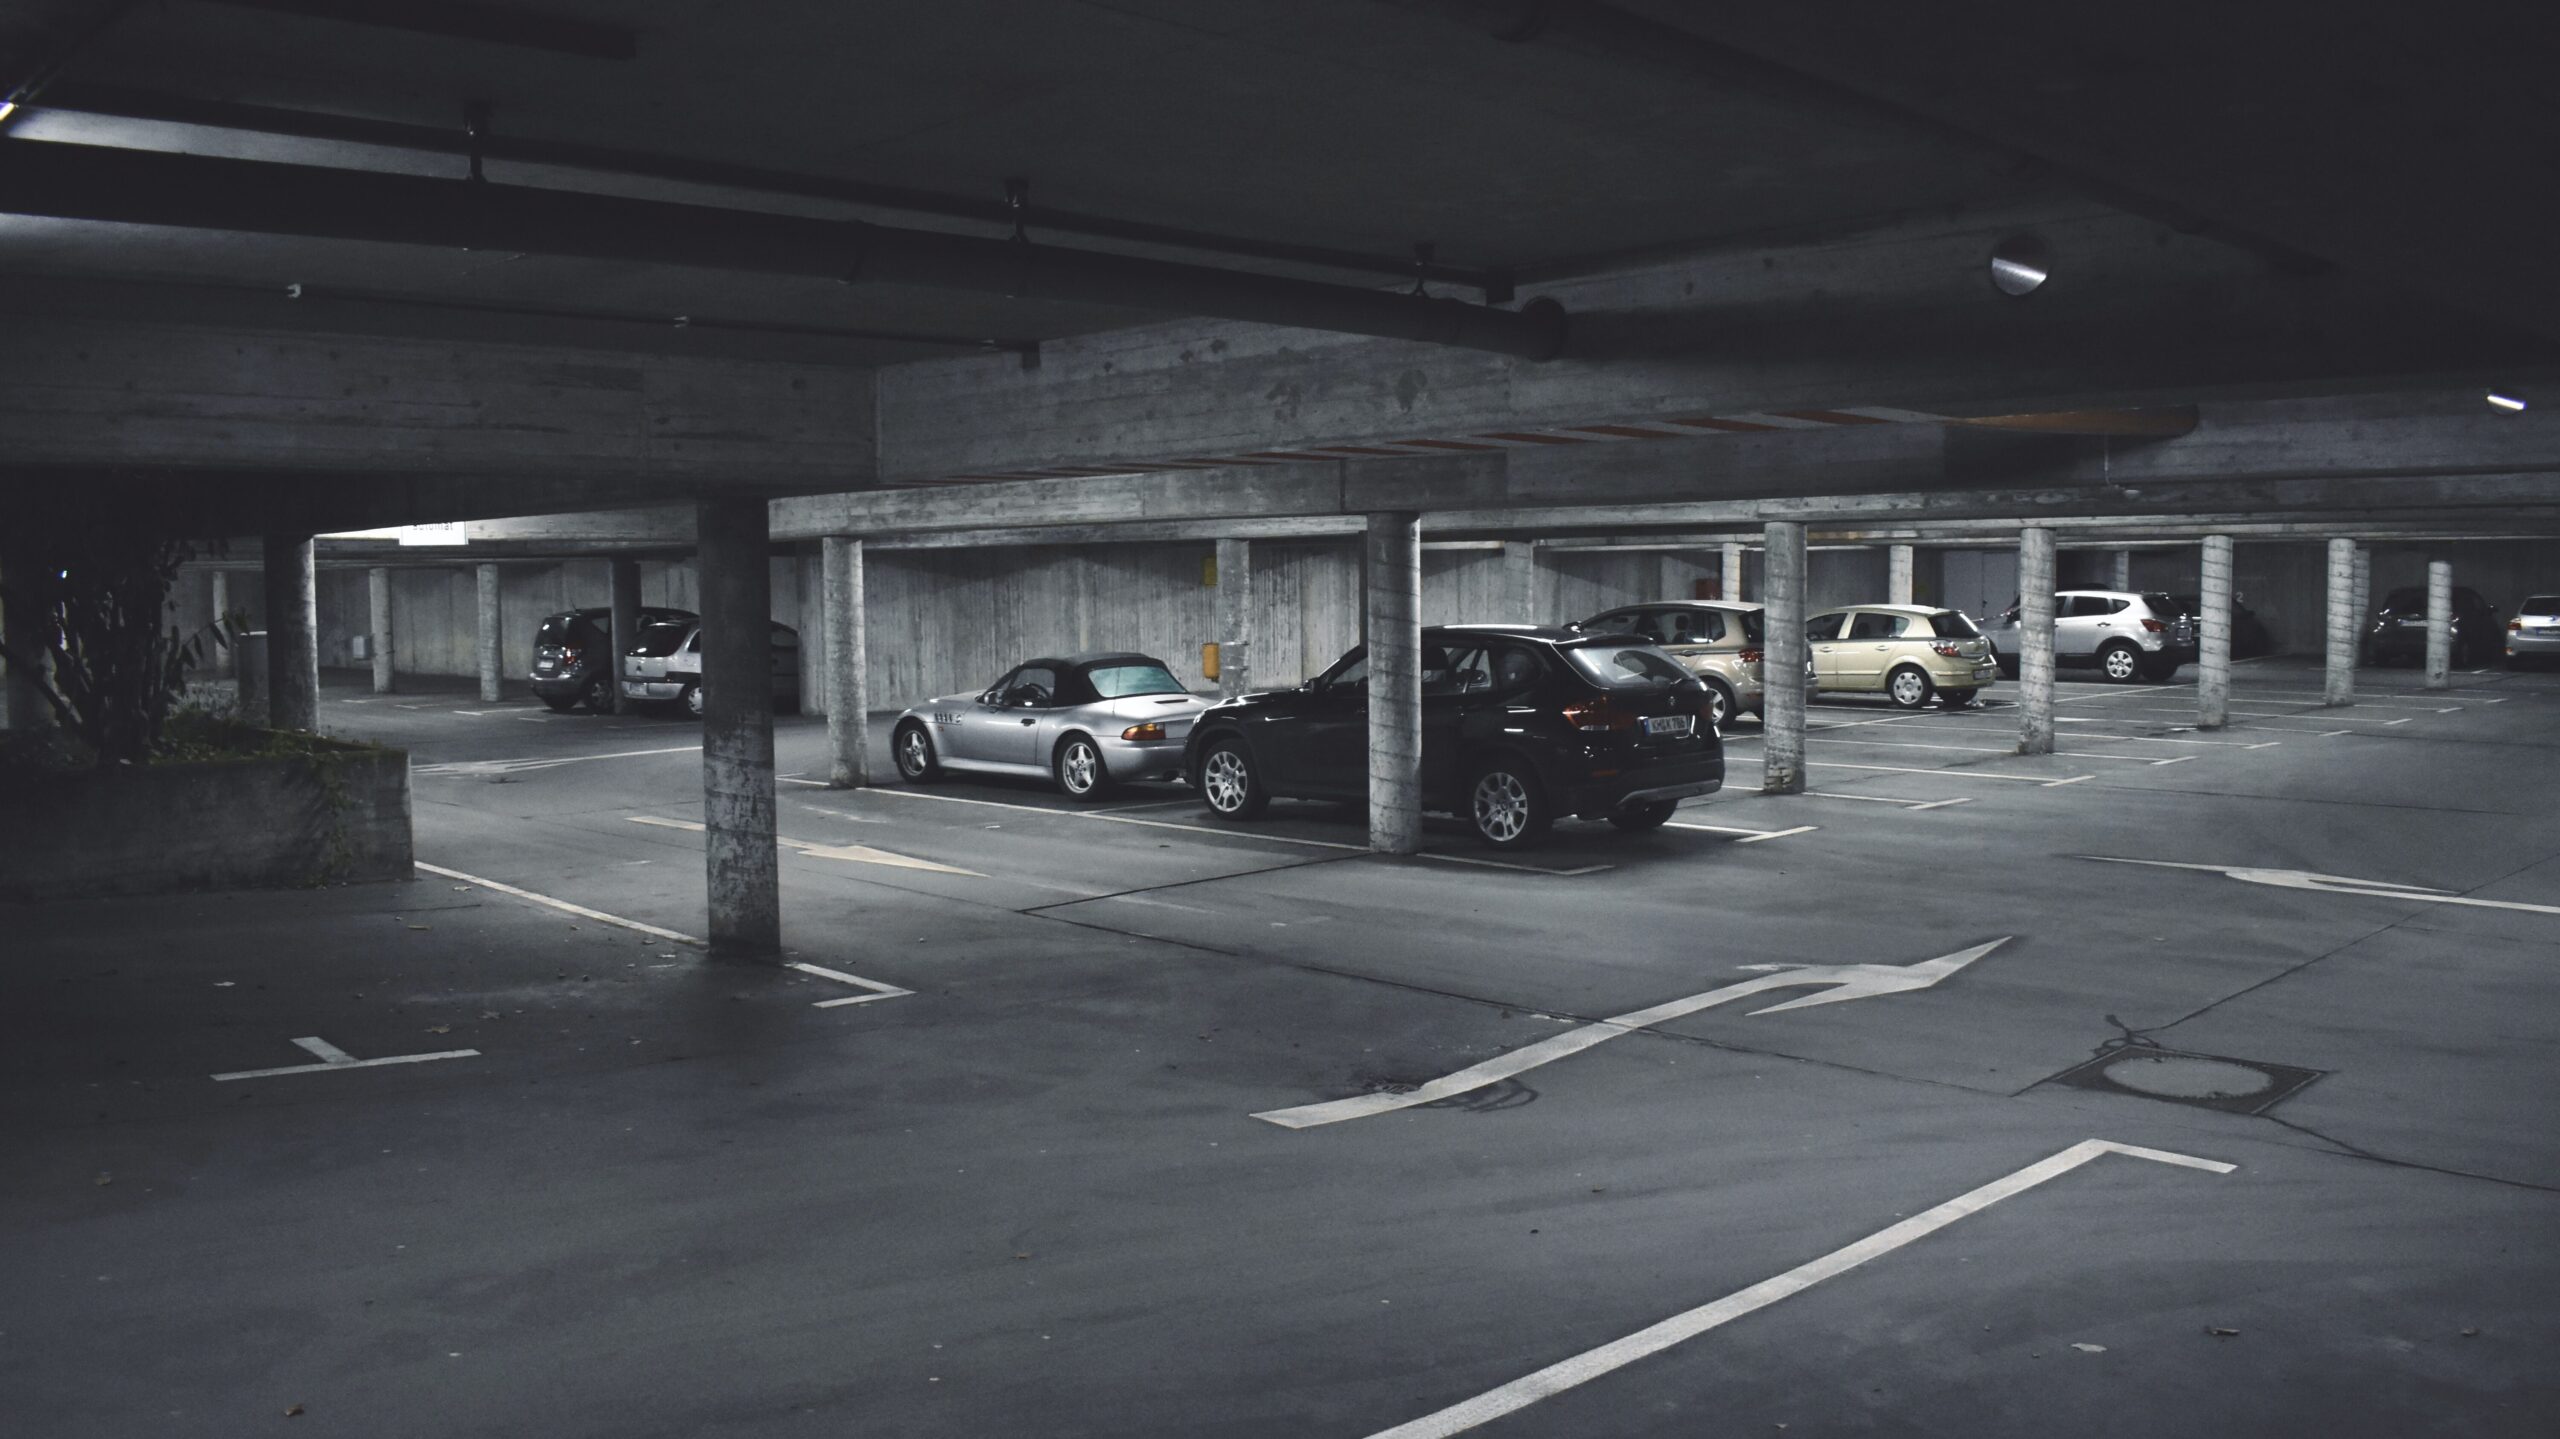 background image of a parking garage